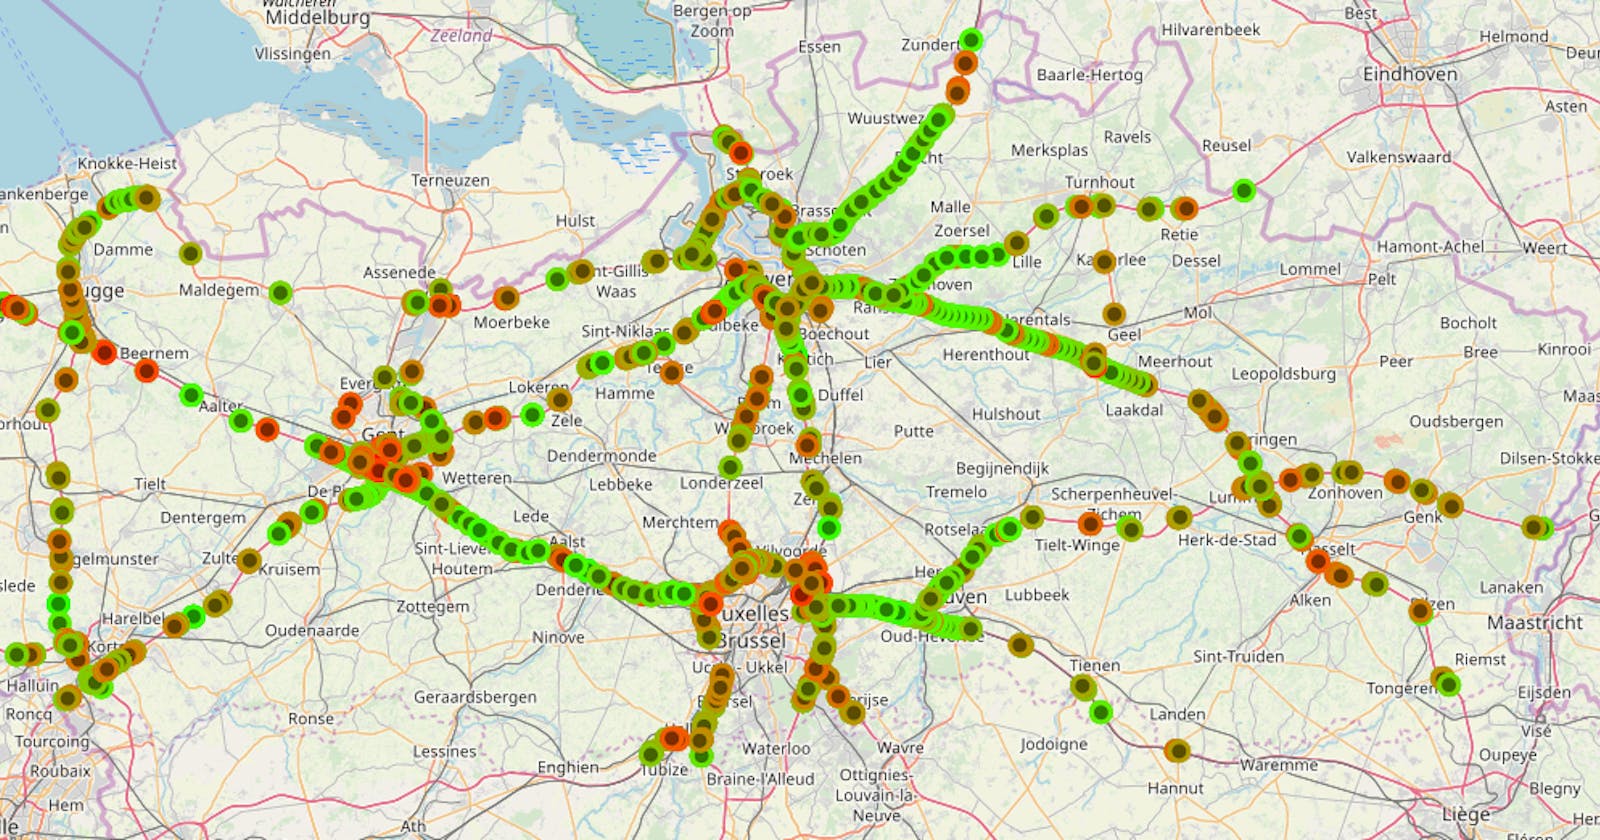 Traffic data visualized!